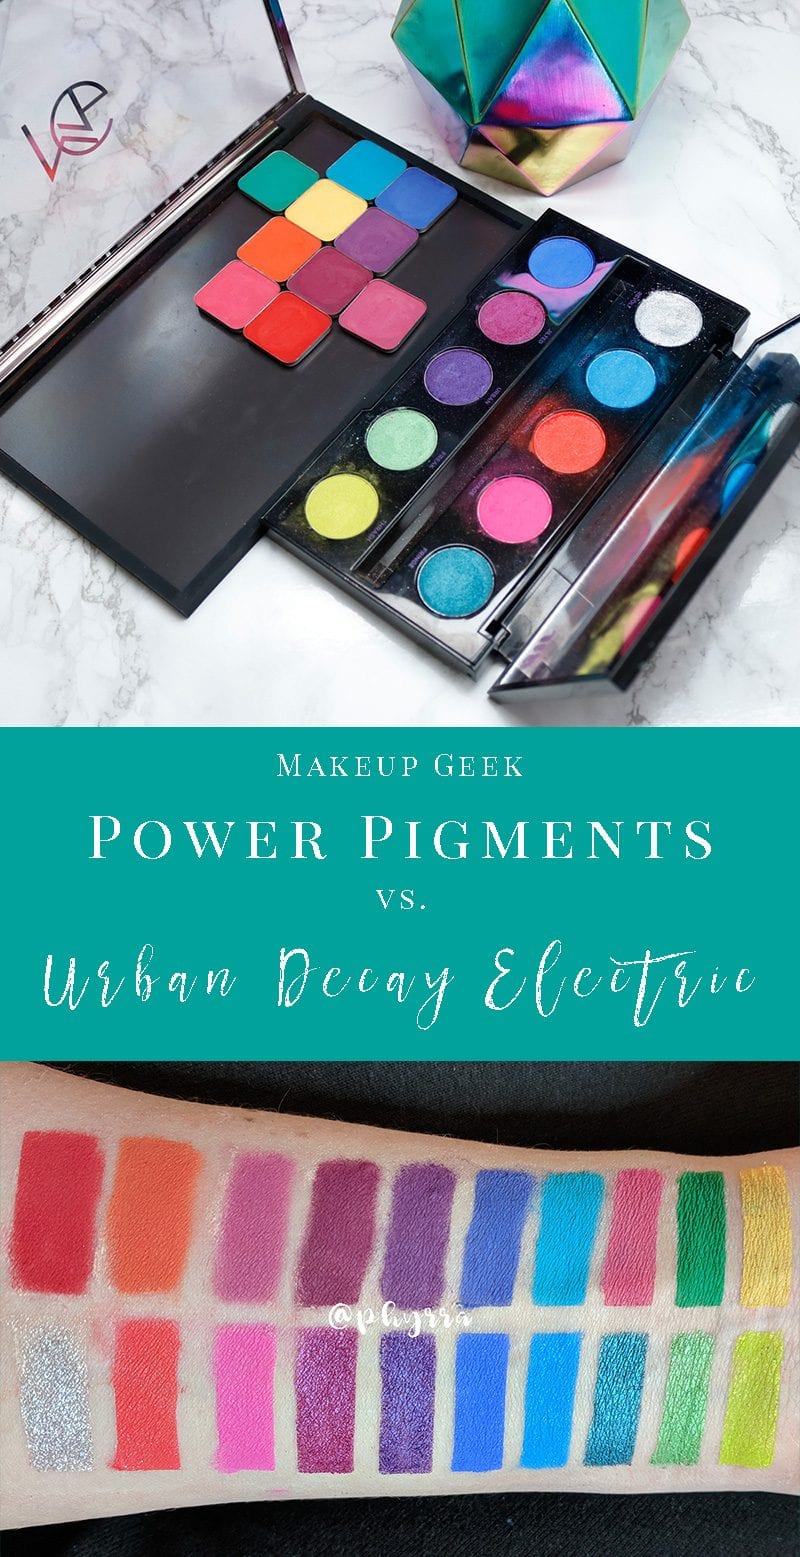 Makeup Geek Power Pigments vs Urban Decay Electric Palette Swatches Comparison Review